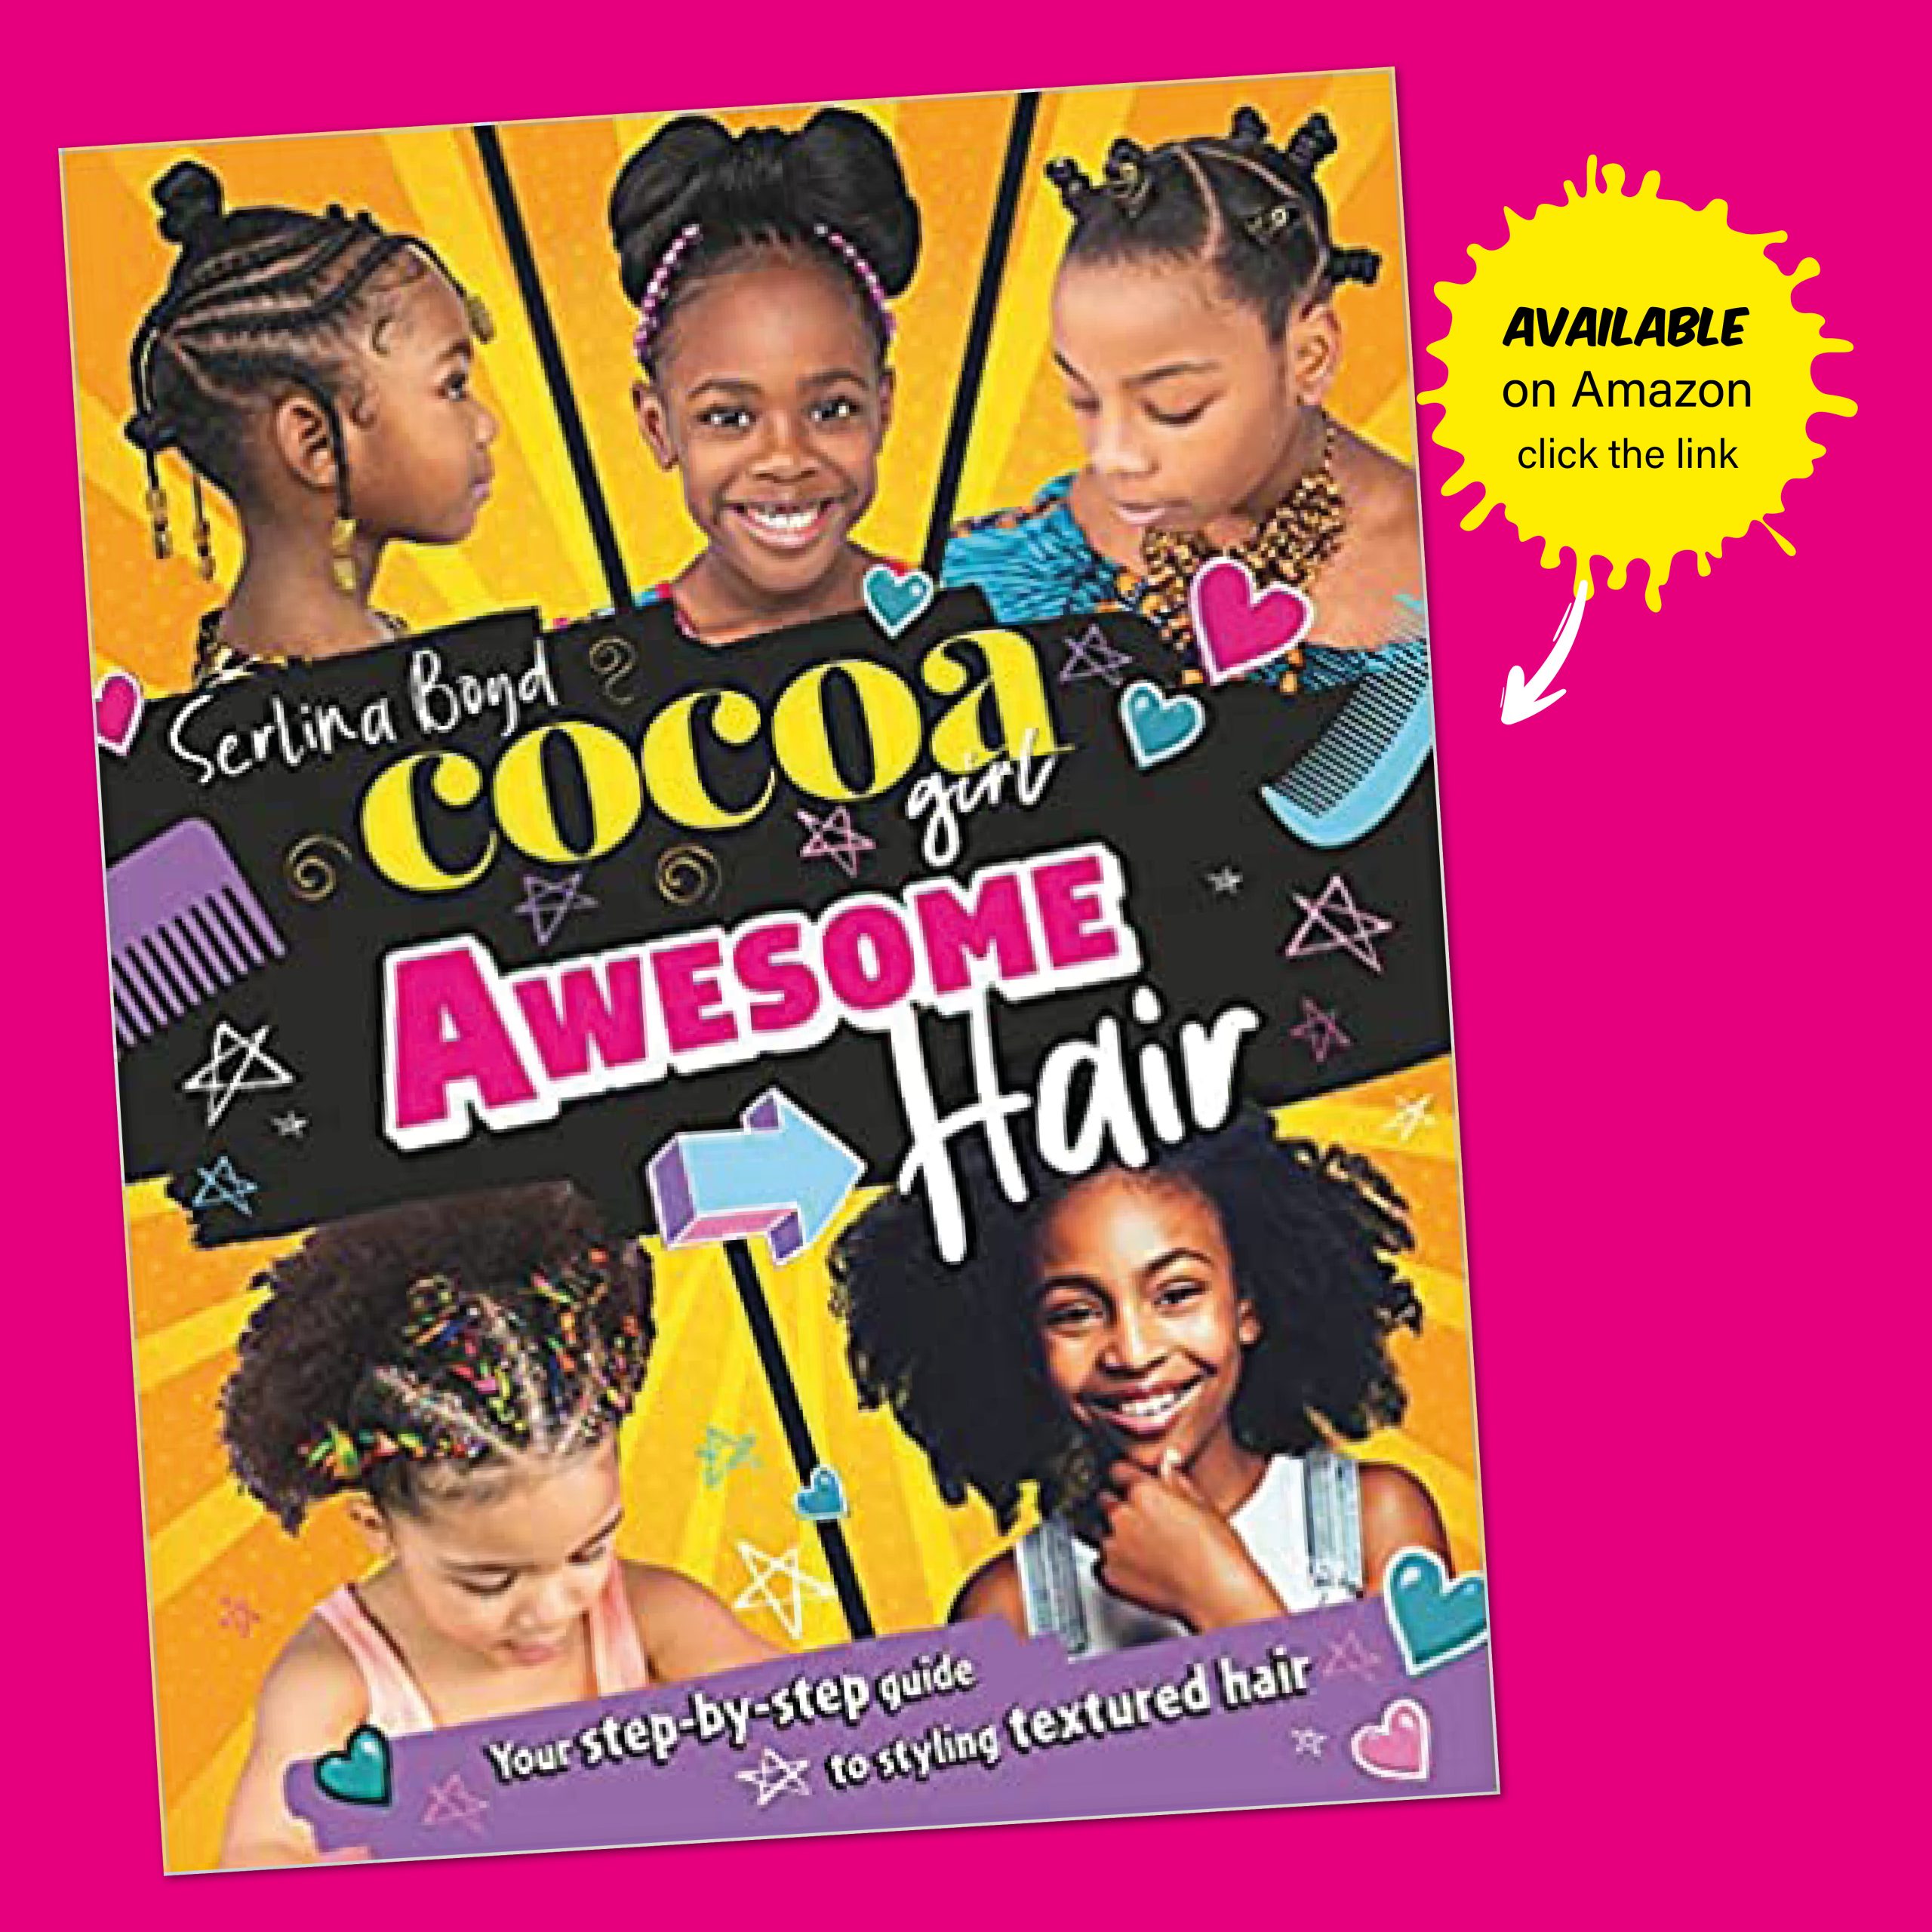 Cocoa Girl Awesome Hair - Cocoa Girl